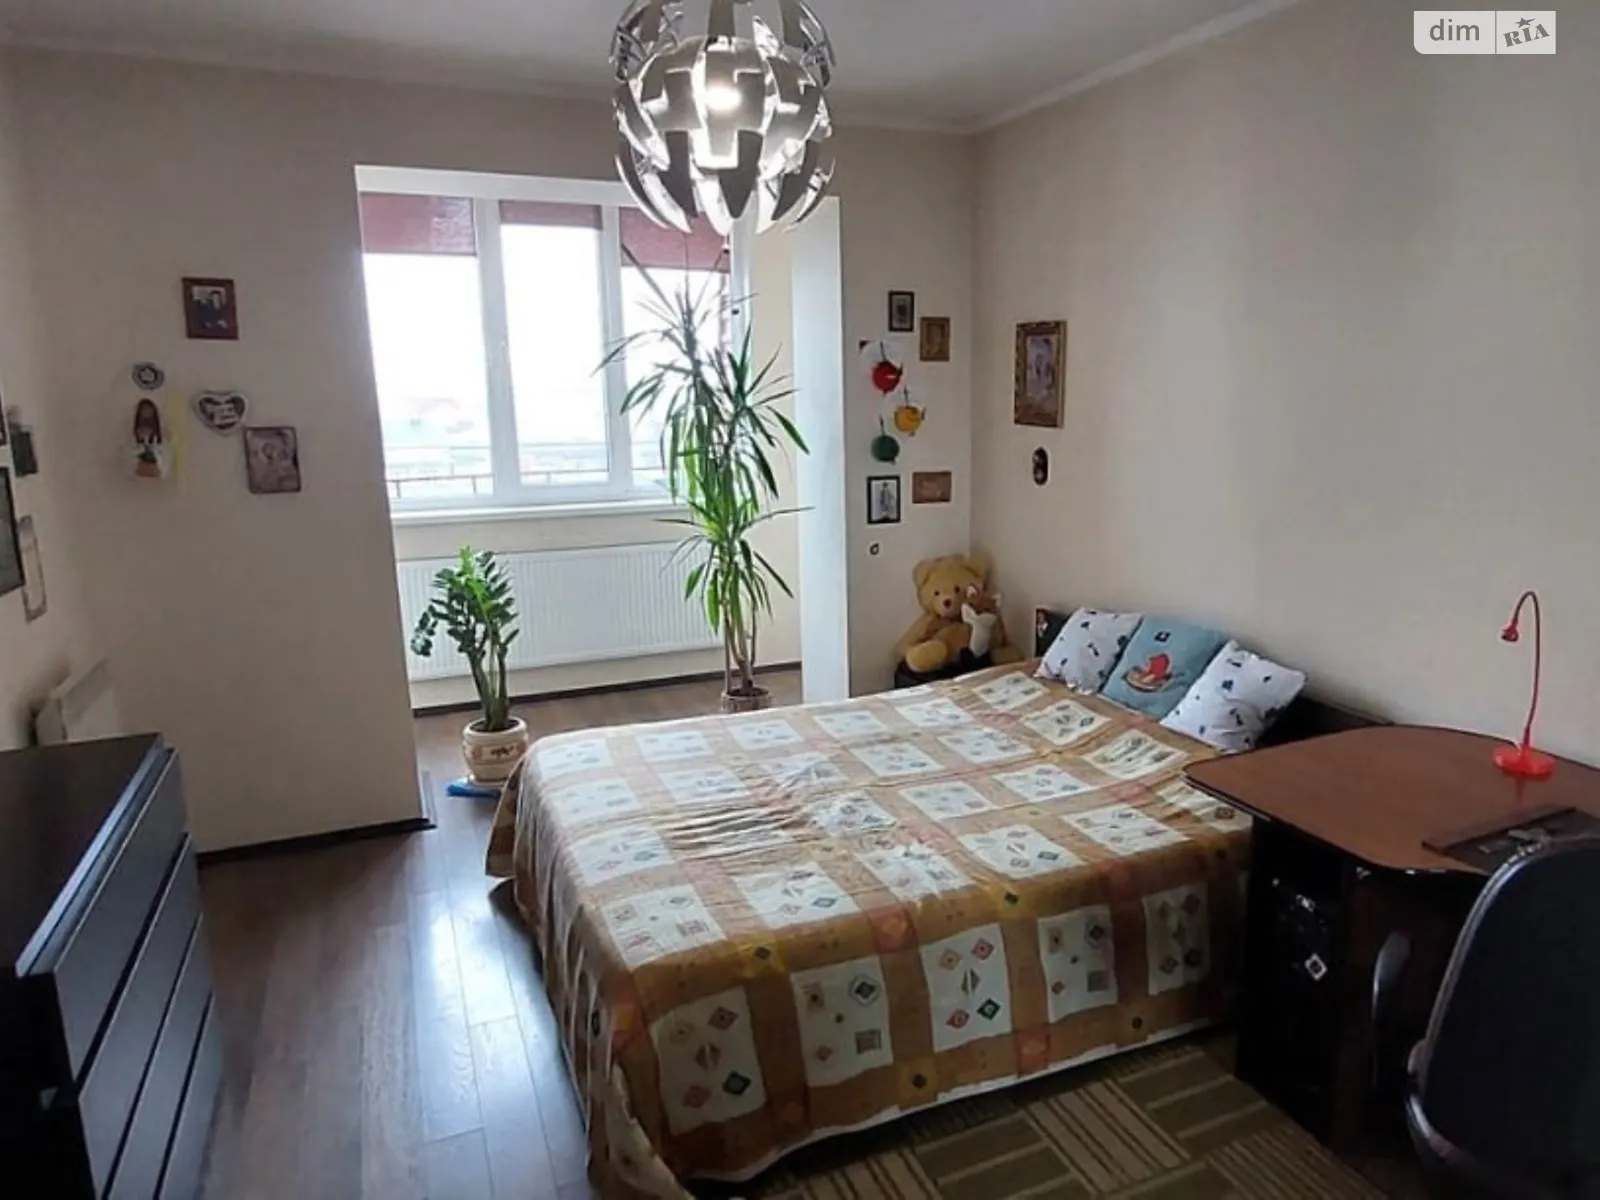 Продается 3-комнатная квартира 110.1 кв. м в Ивано-Франковске - фото 4